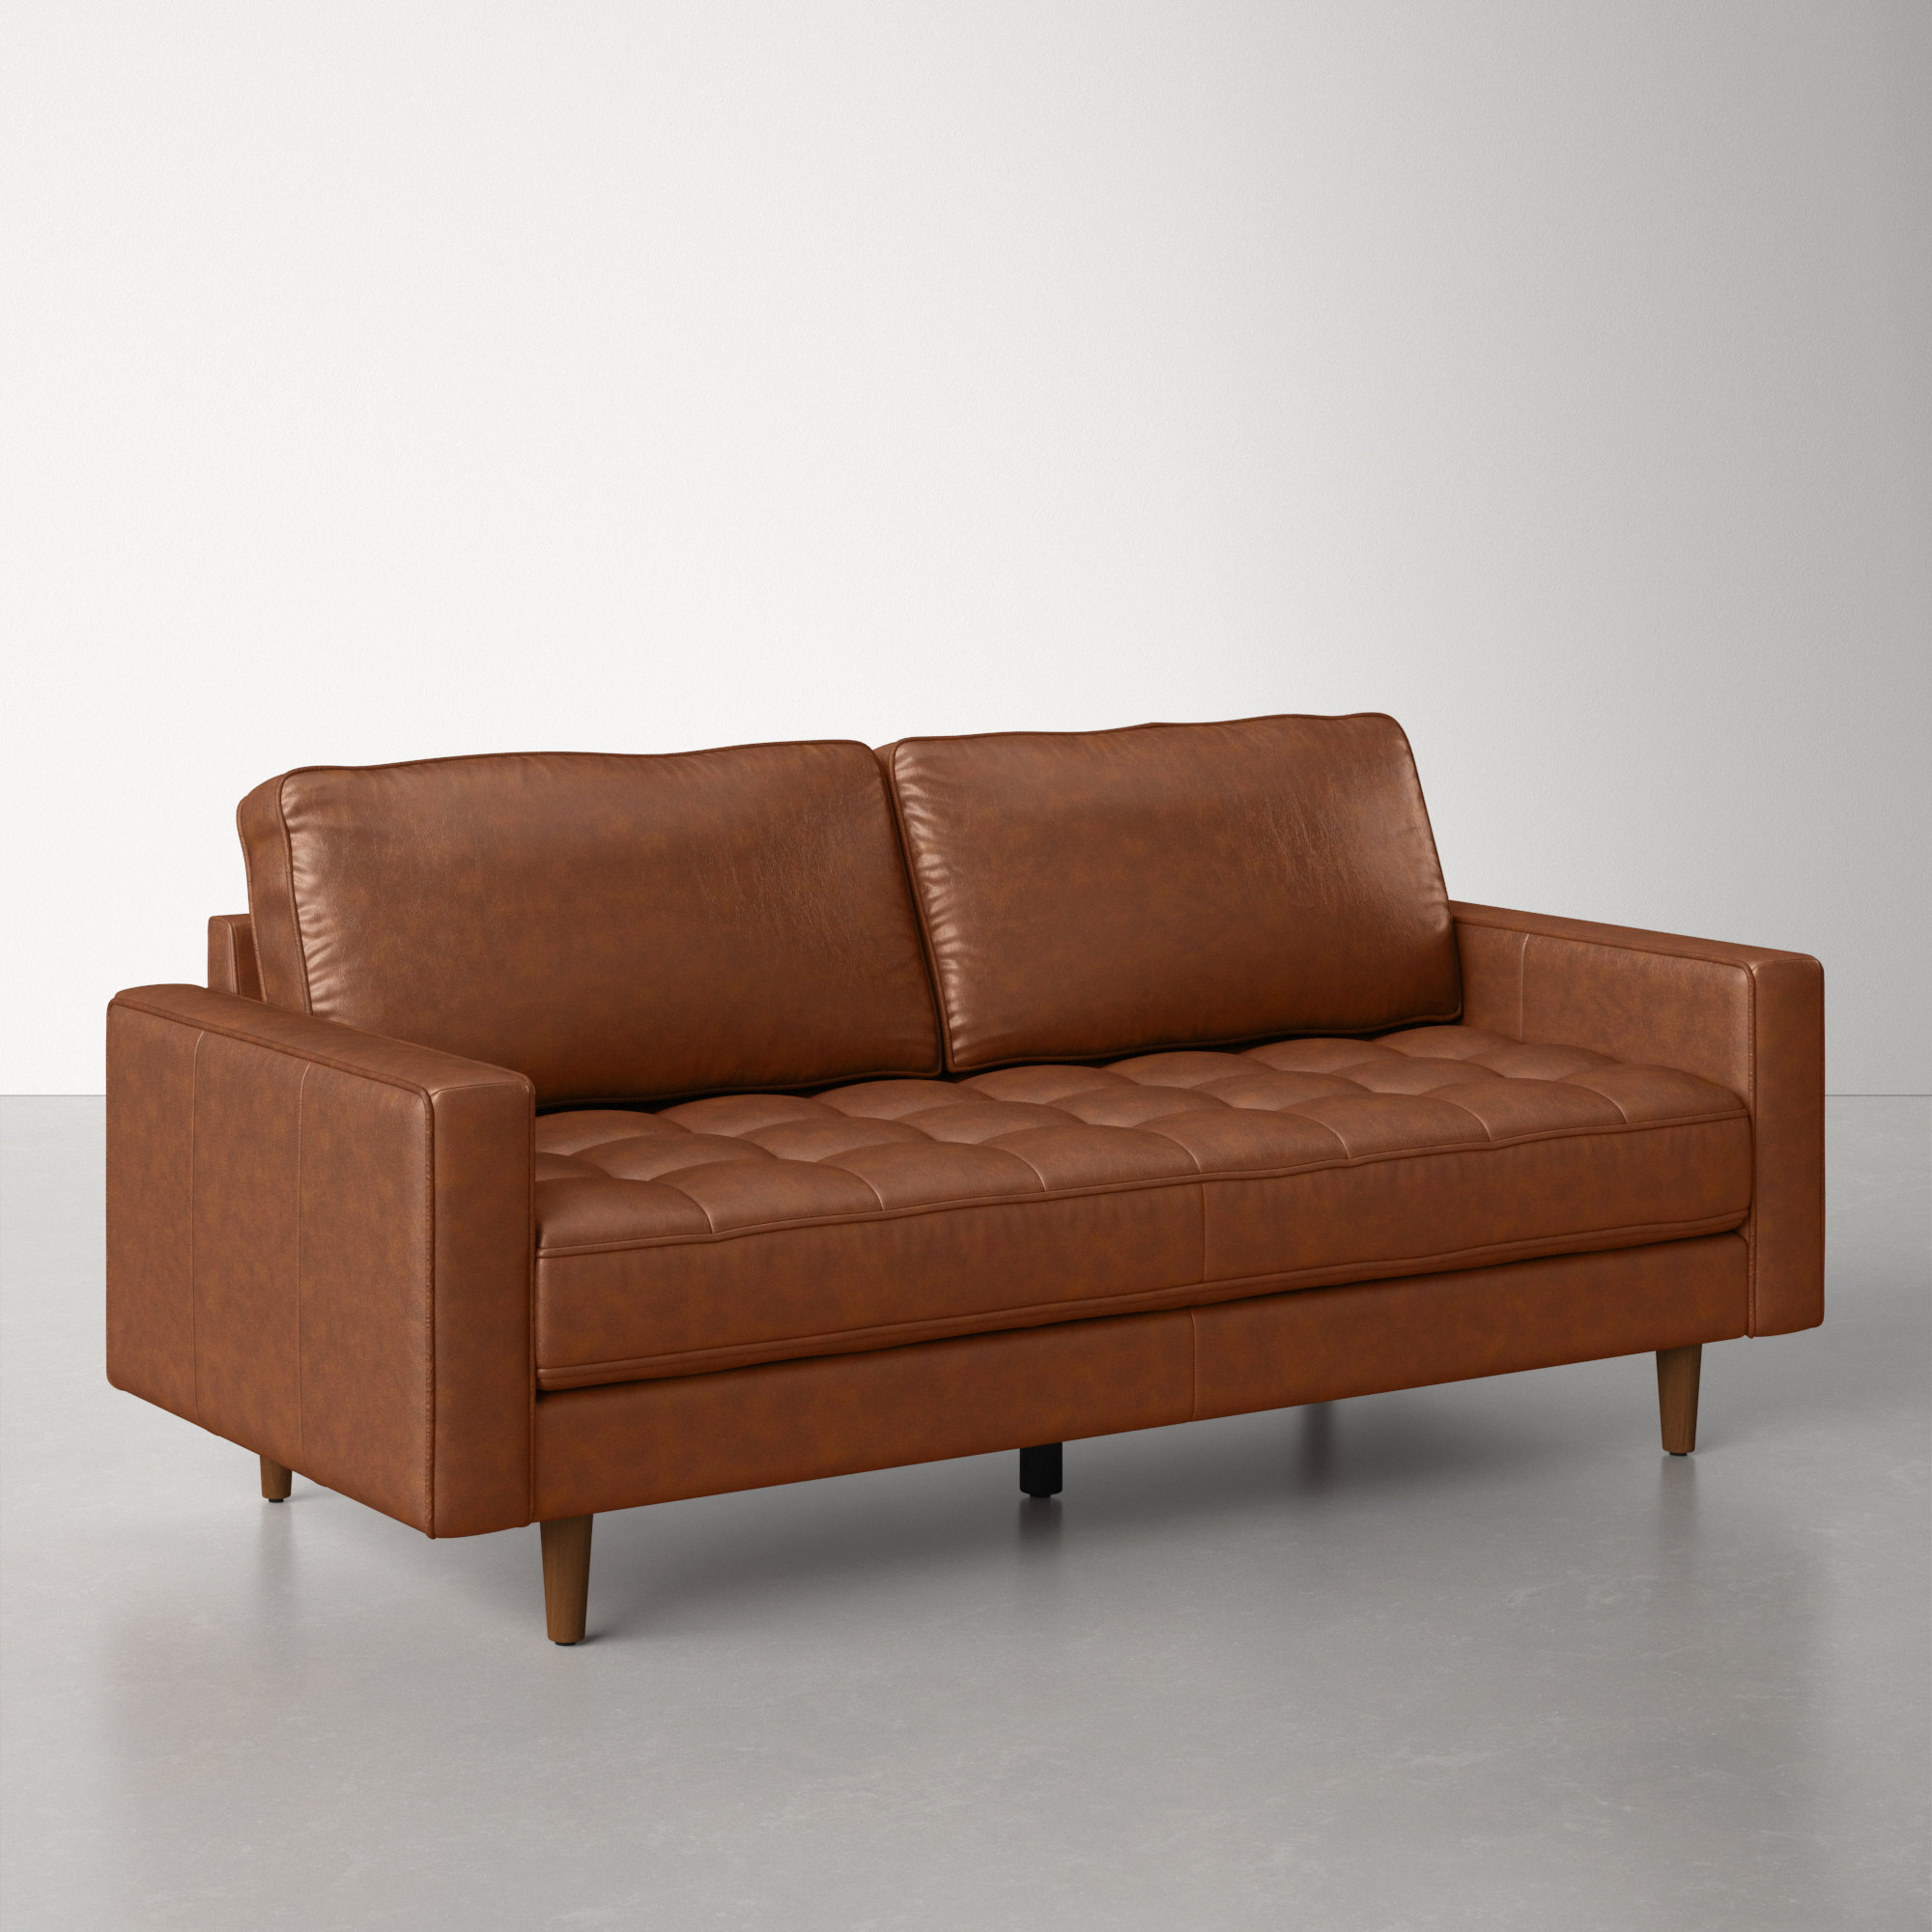 Replacement Couch Cushions Foam, Furniture Foam Replacement Sofa, NJ, DE